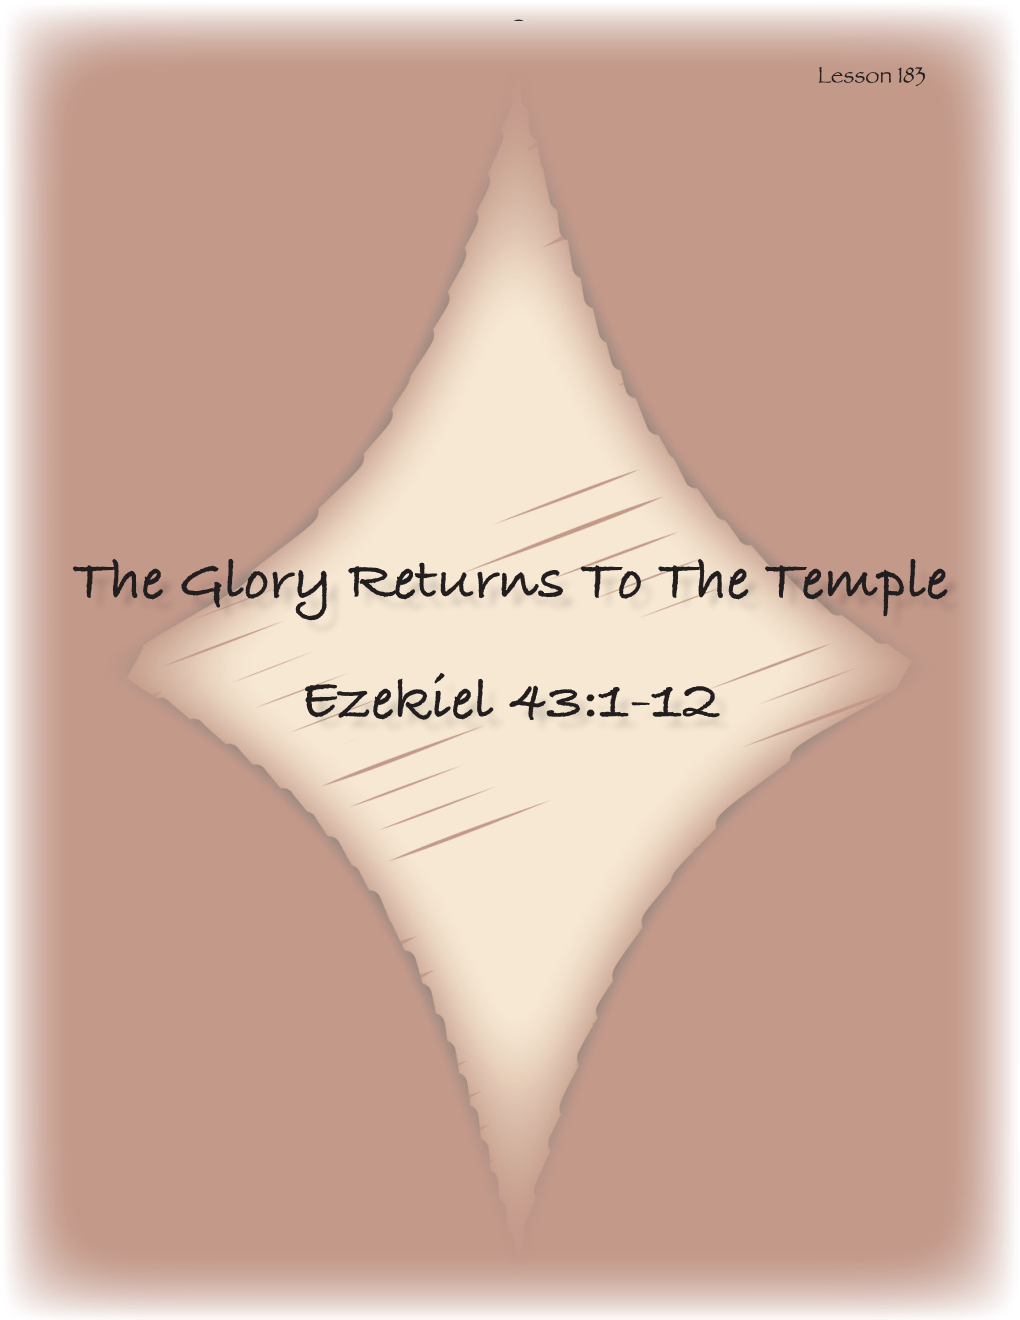 The Glory Returns to the Temple Ezekiel 43:1-12